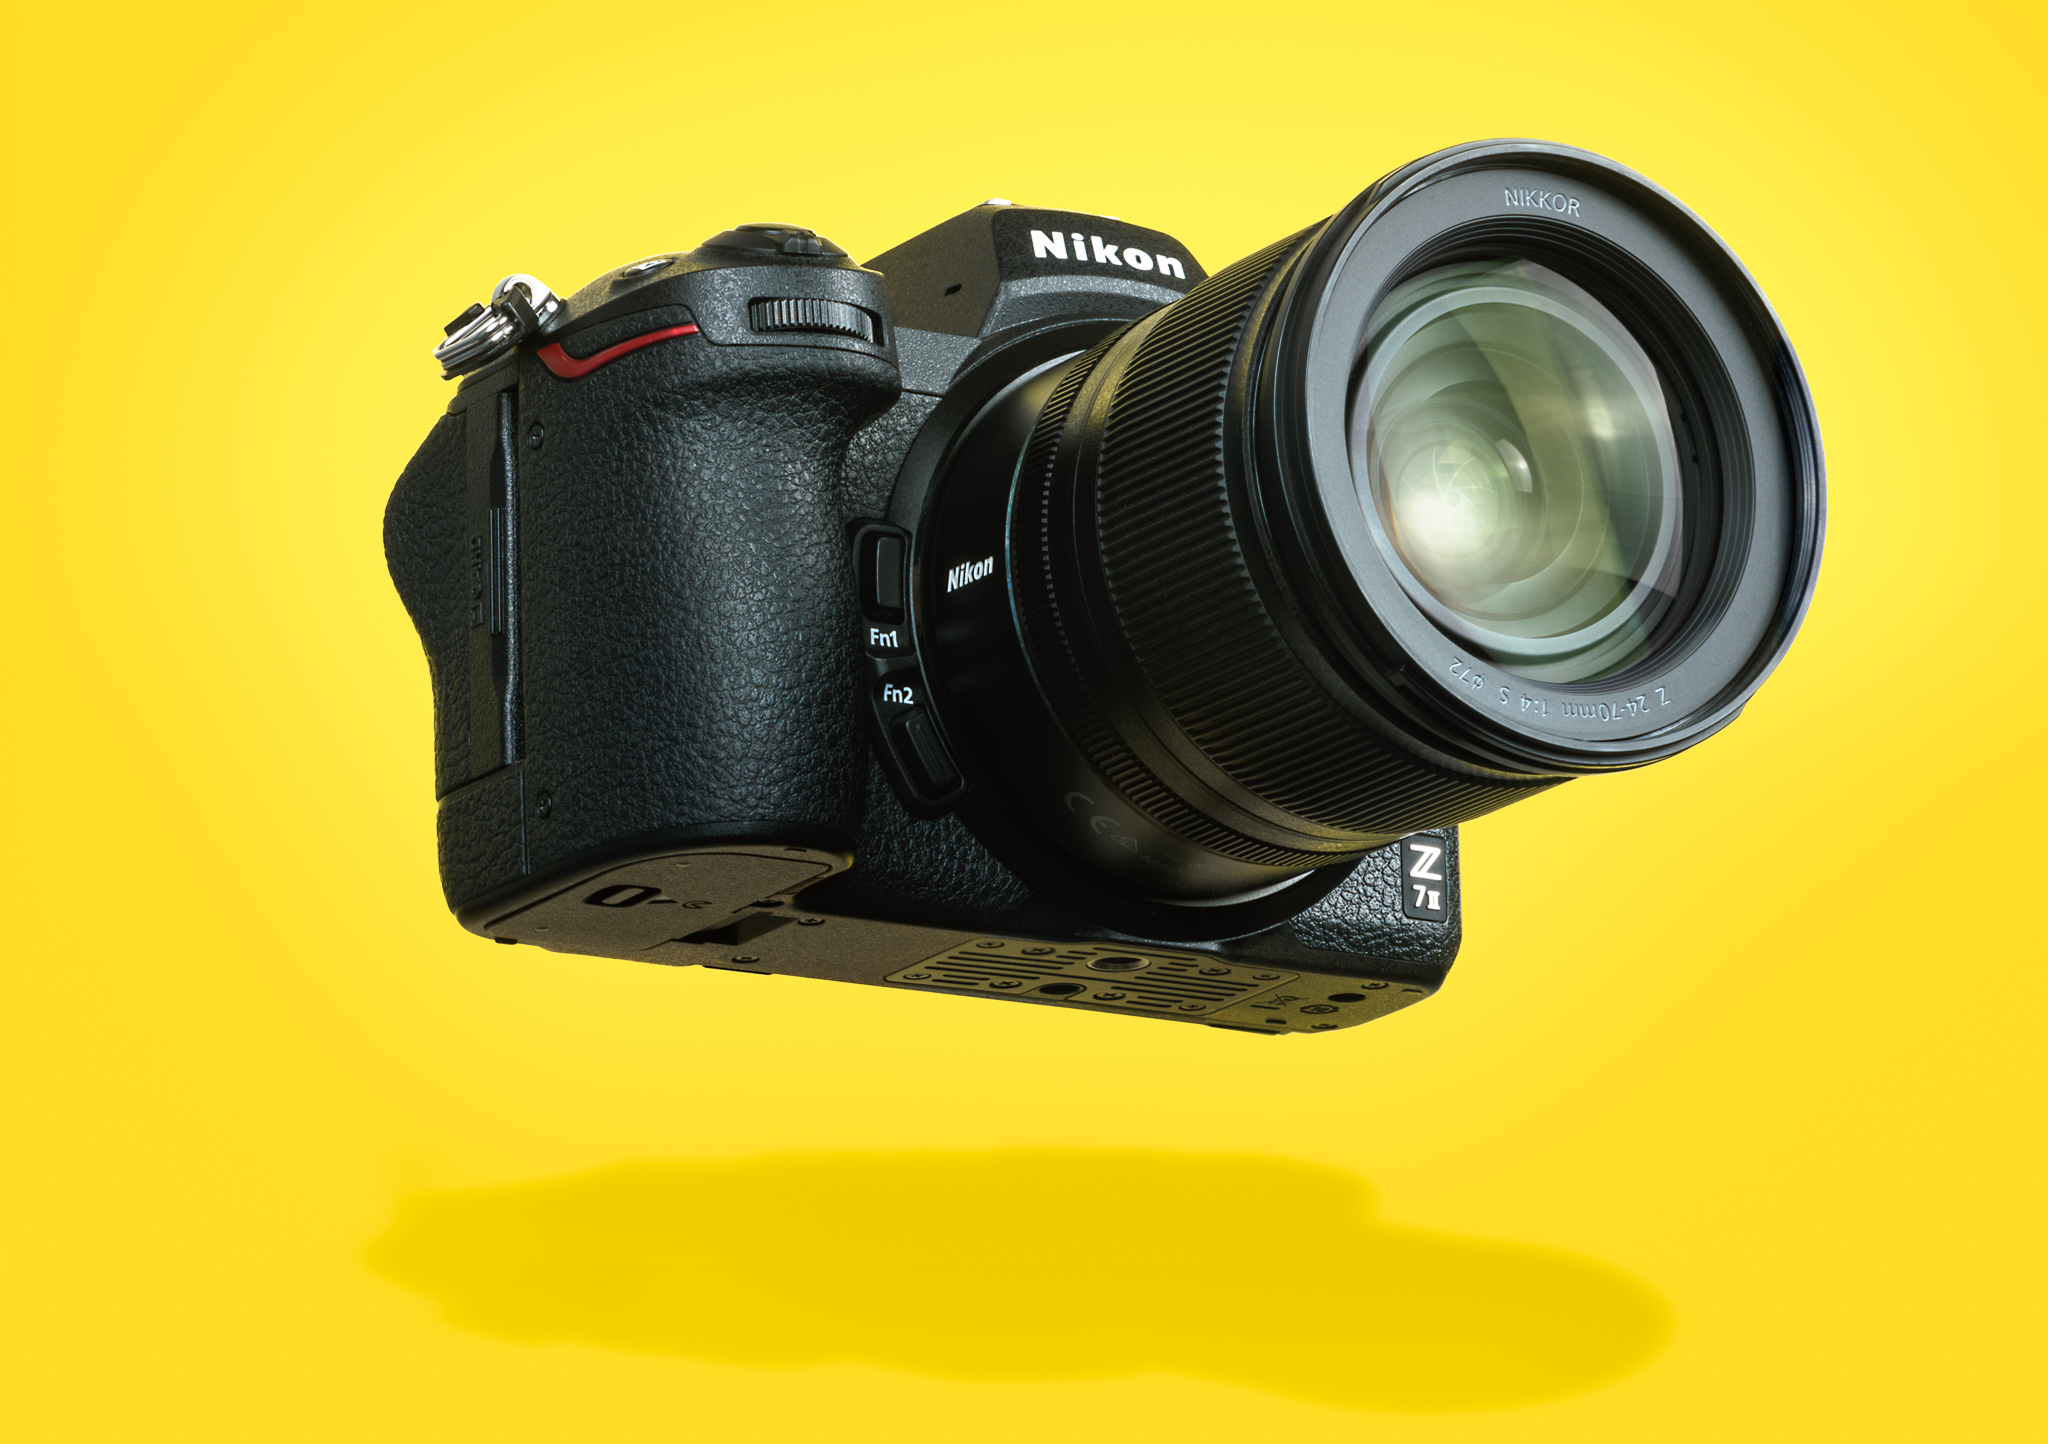 Nikon Z7 II  45.7 MP Full Frame Mirrorless Camera